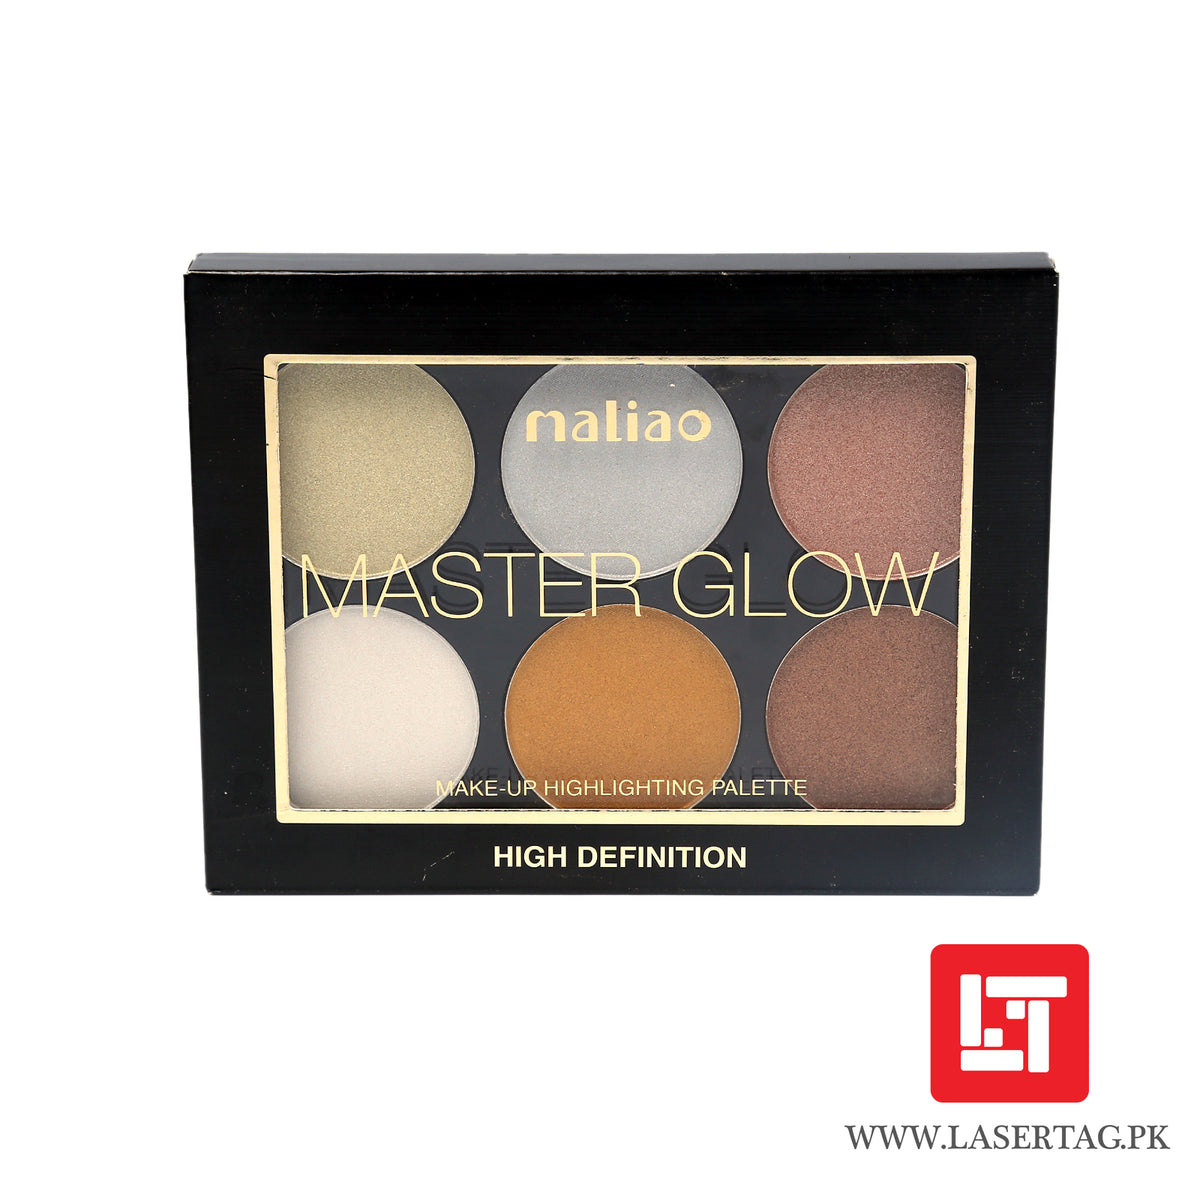 Maliao Master Glow Make-up Highlighting Palette High Definition M157-02 18g freeshipping - lasertag.pk